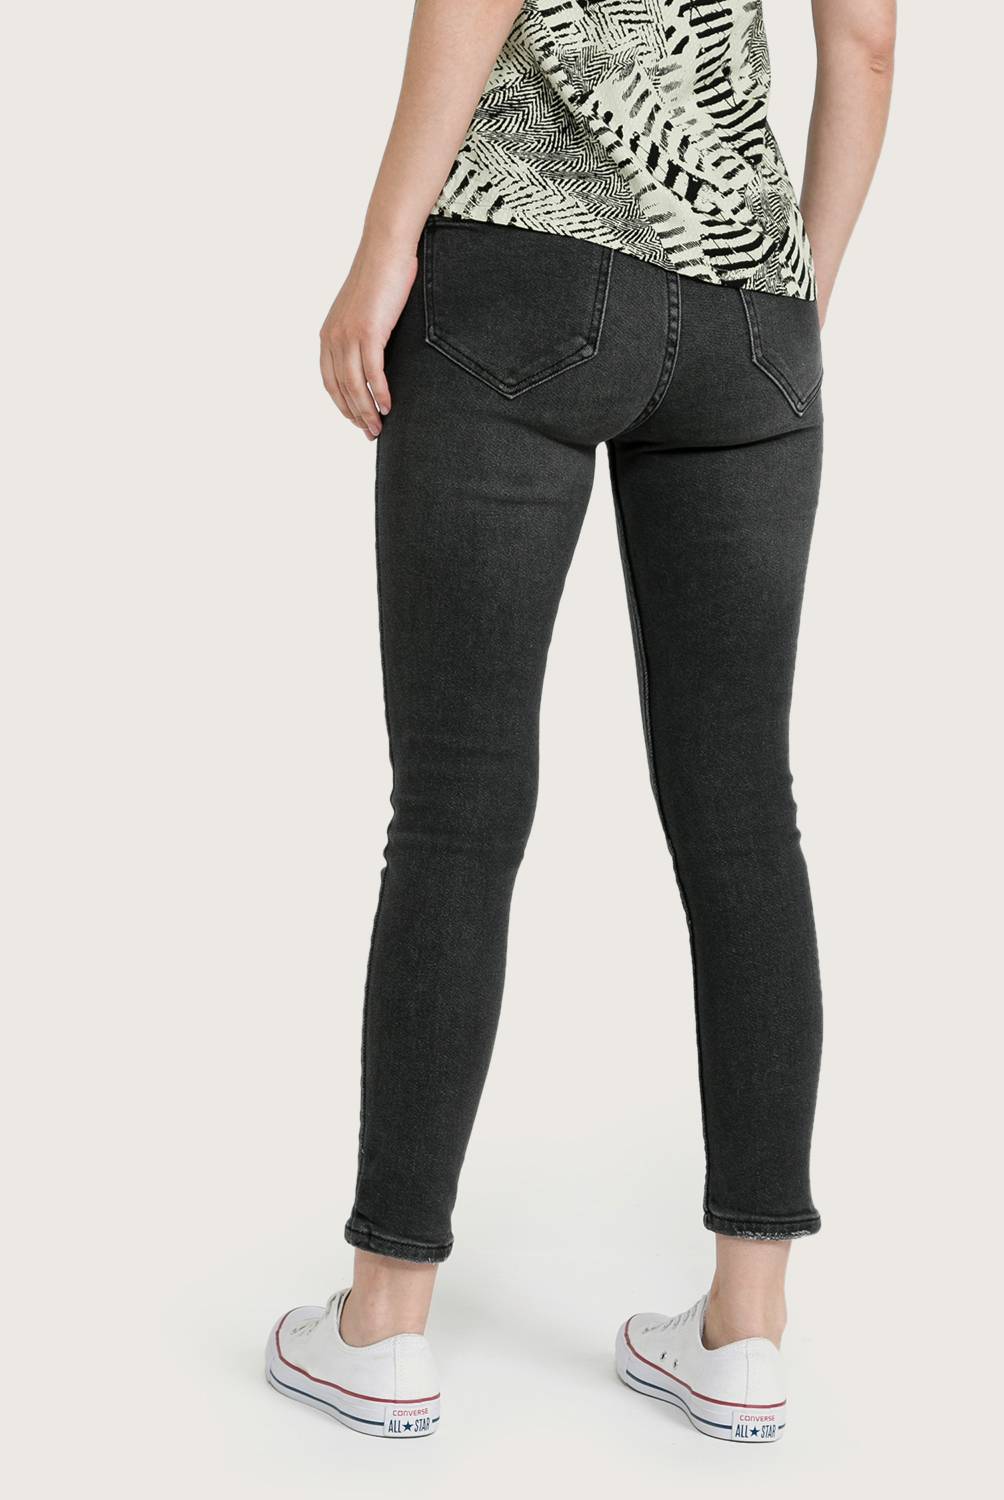 AMERICANINO - Jeans Skinny Mujer